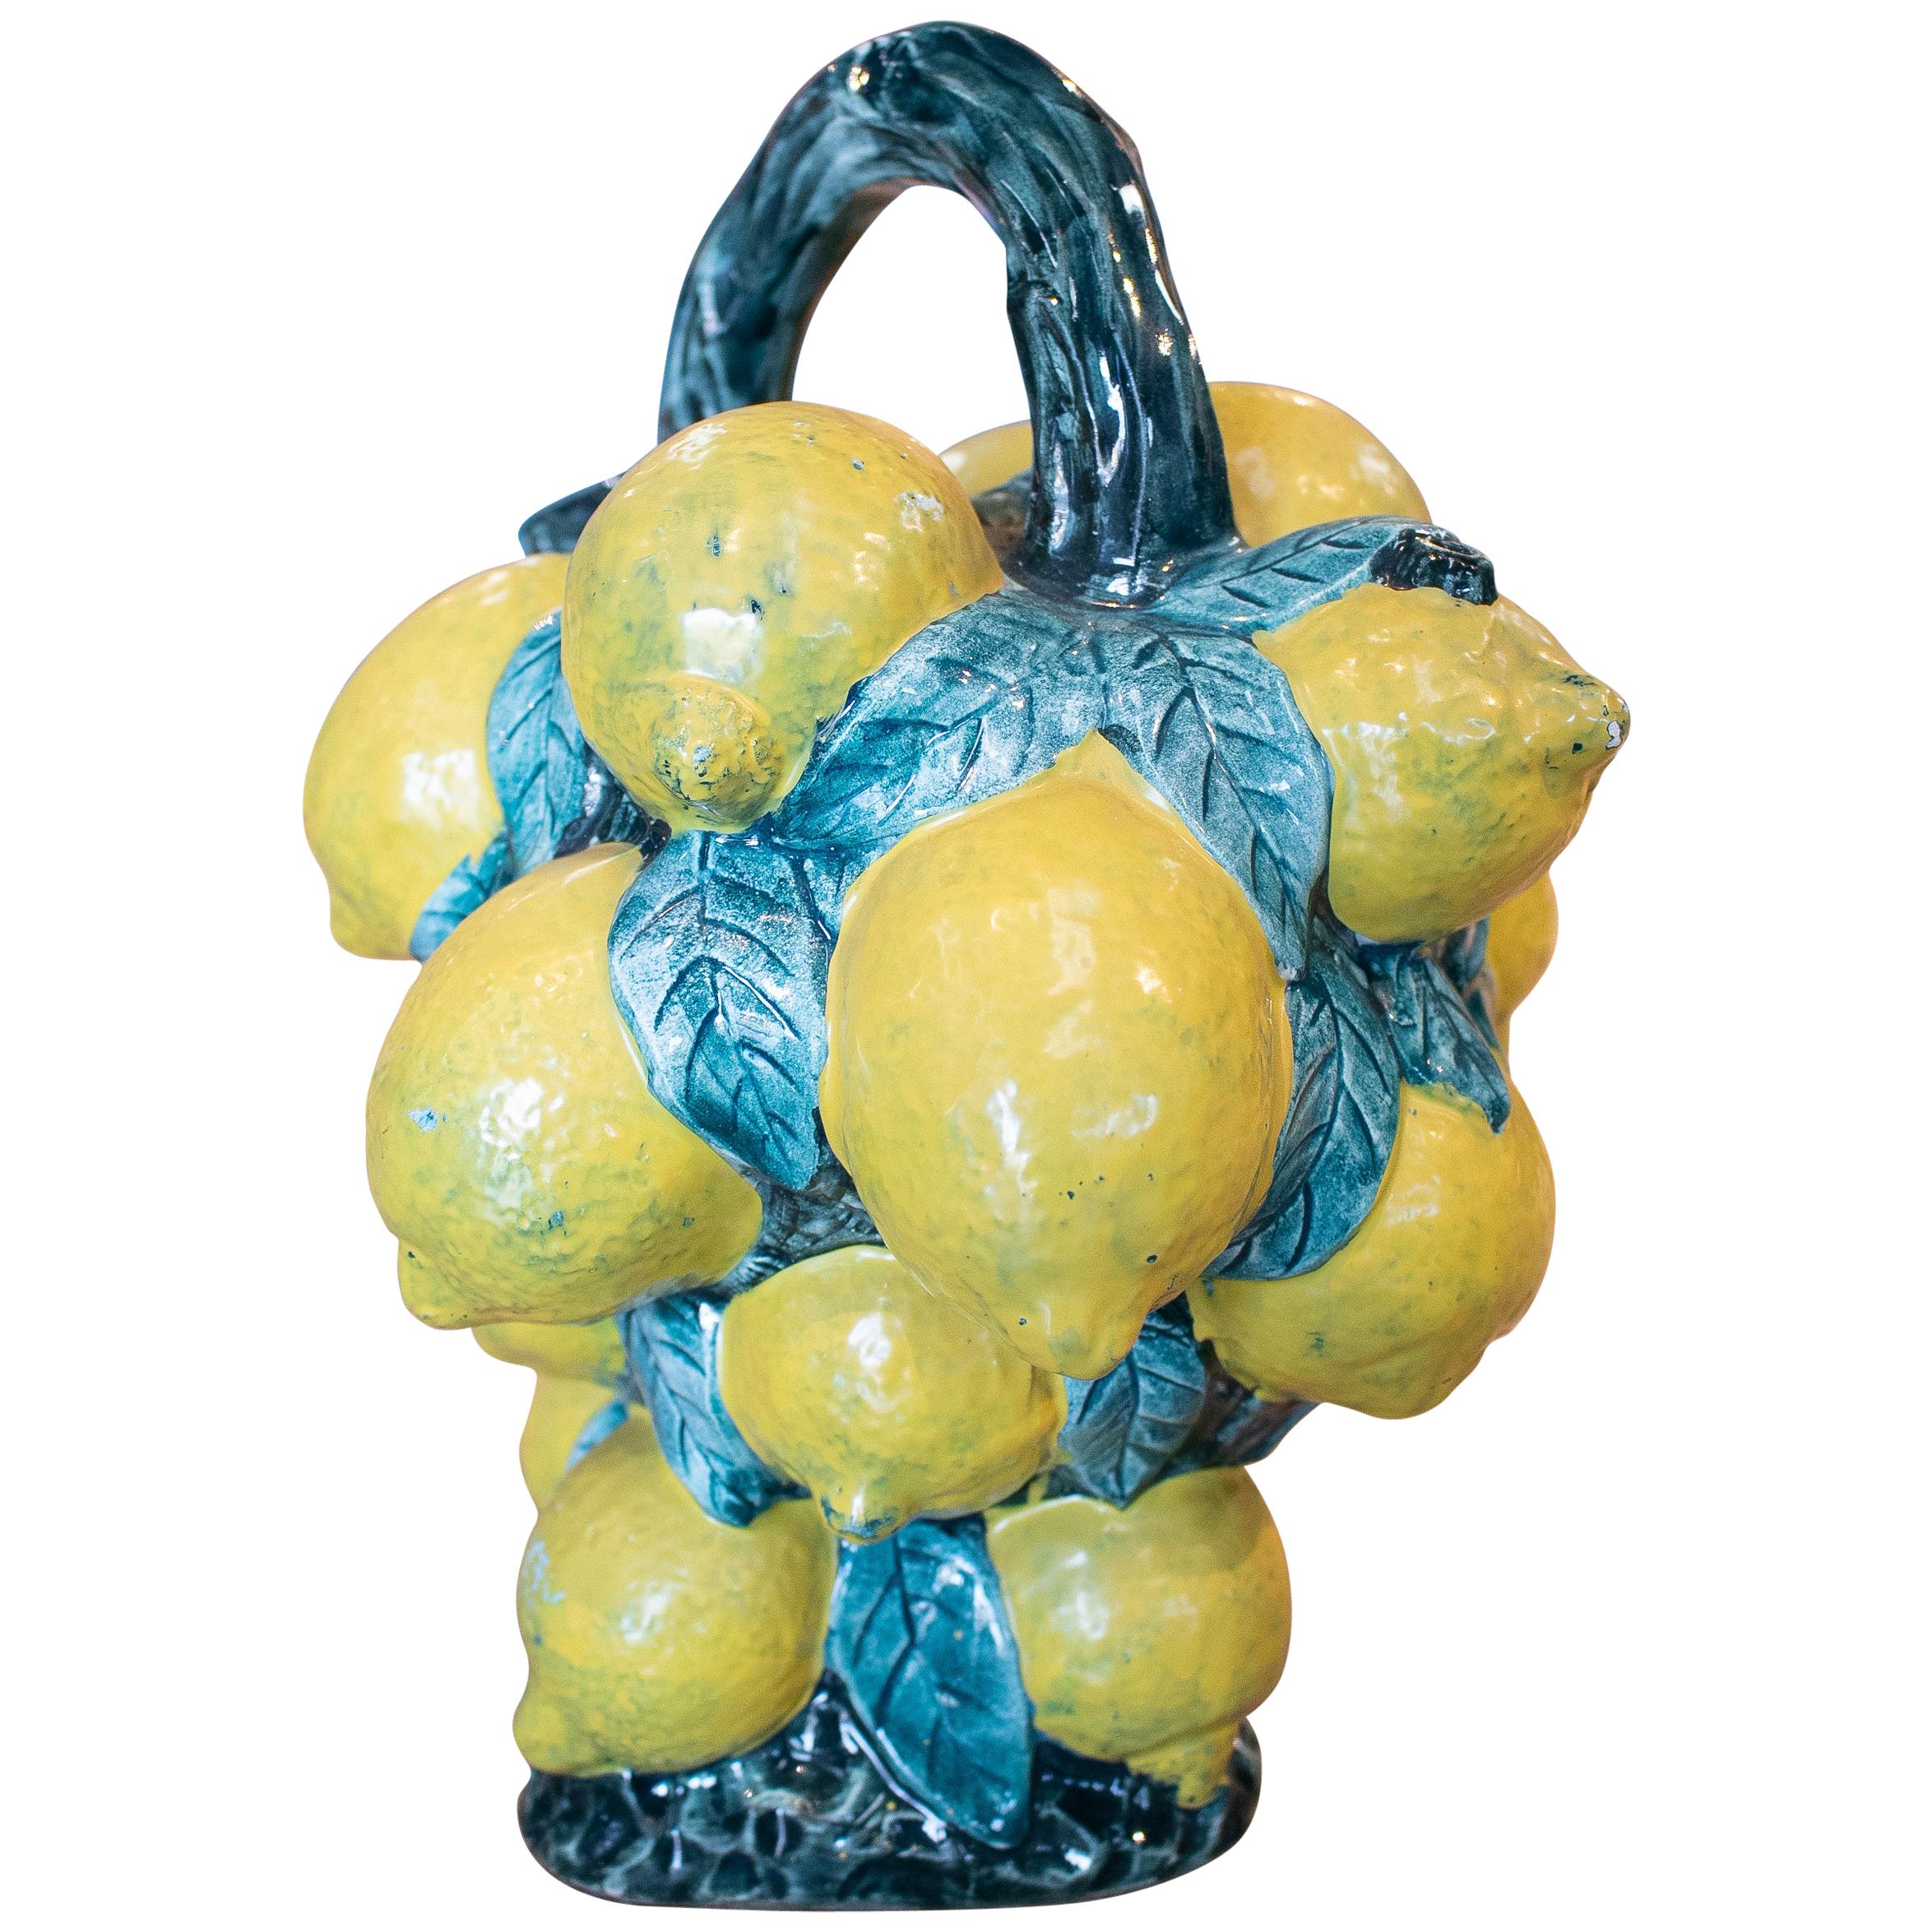 1970s Spanish Lemons Hand Painted "Botijo" Earthenware Water Jug